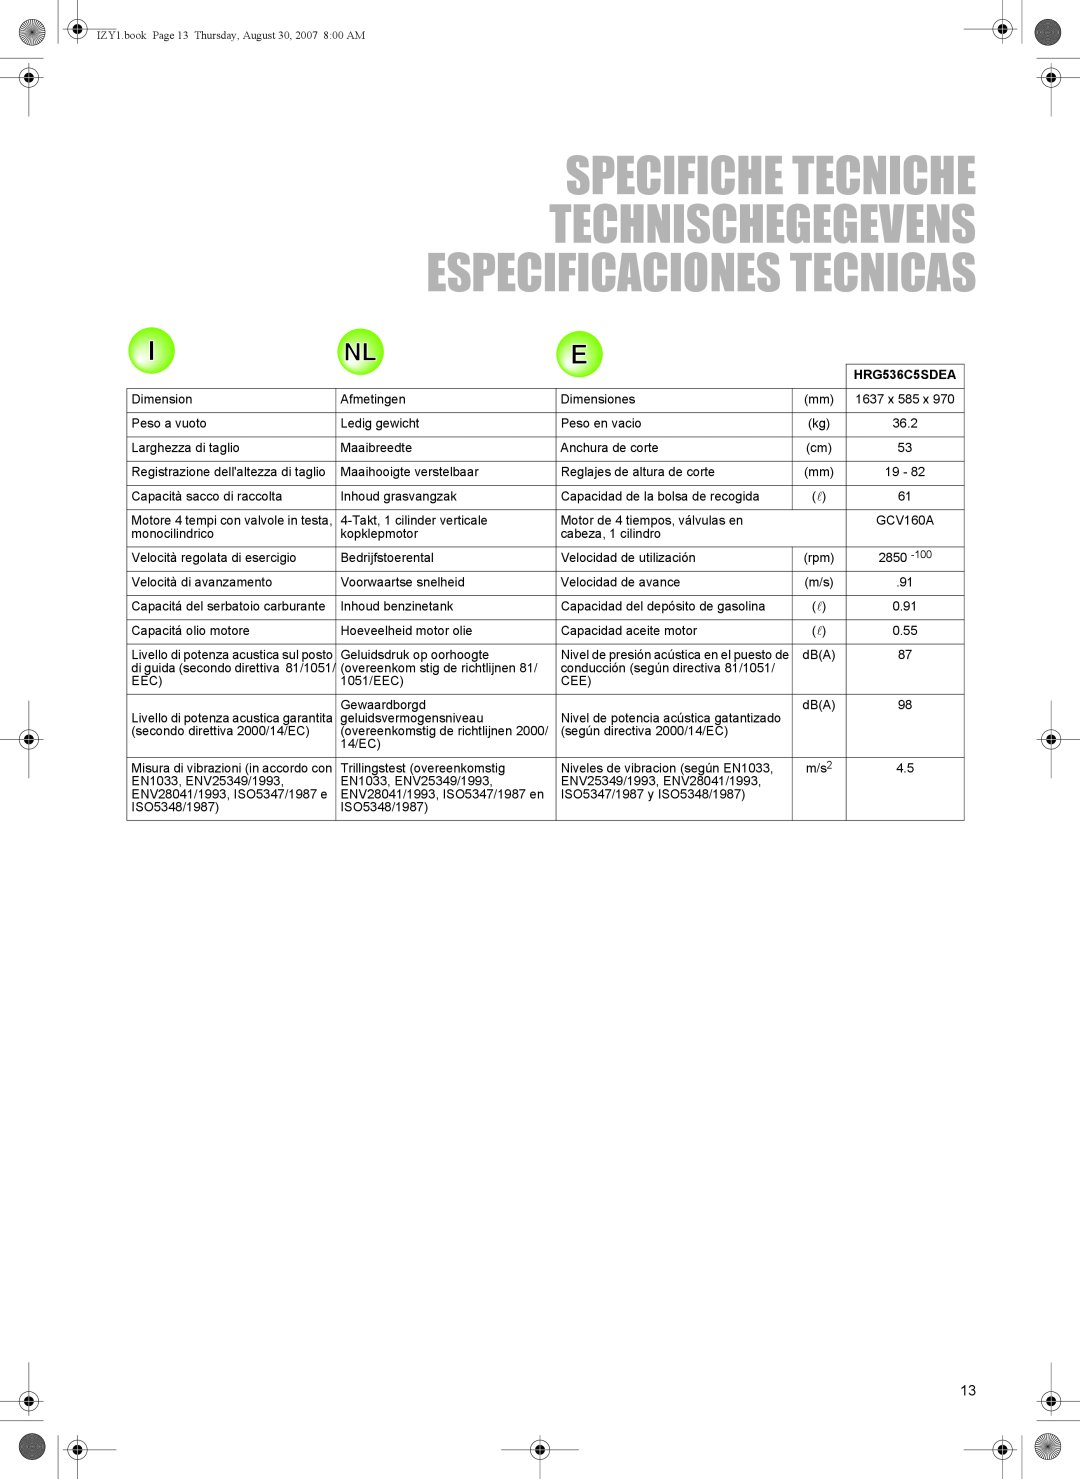 Honda Power Equipment HRG536C owner manual Specifiche Tecniche Technischegegevens, Especificaciones Tecnicas 